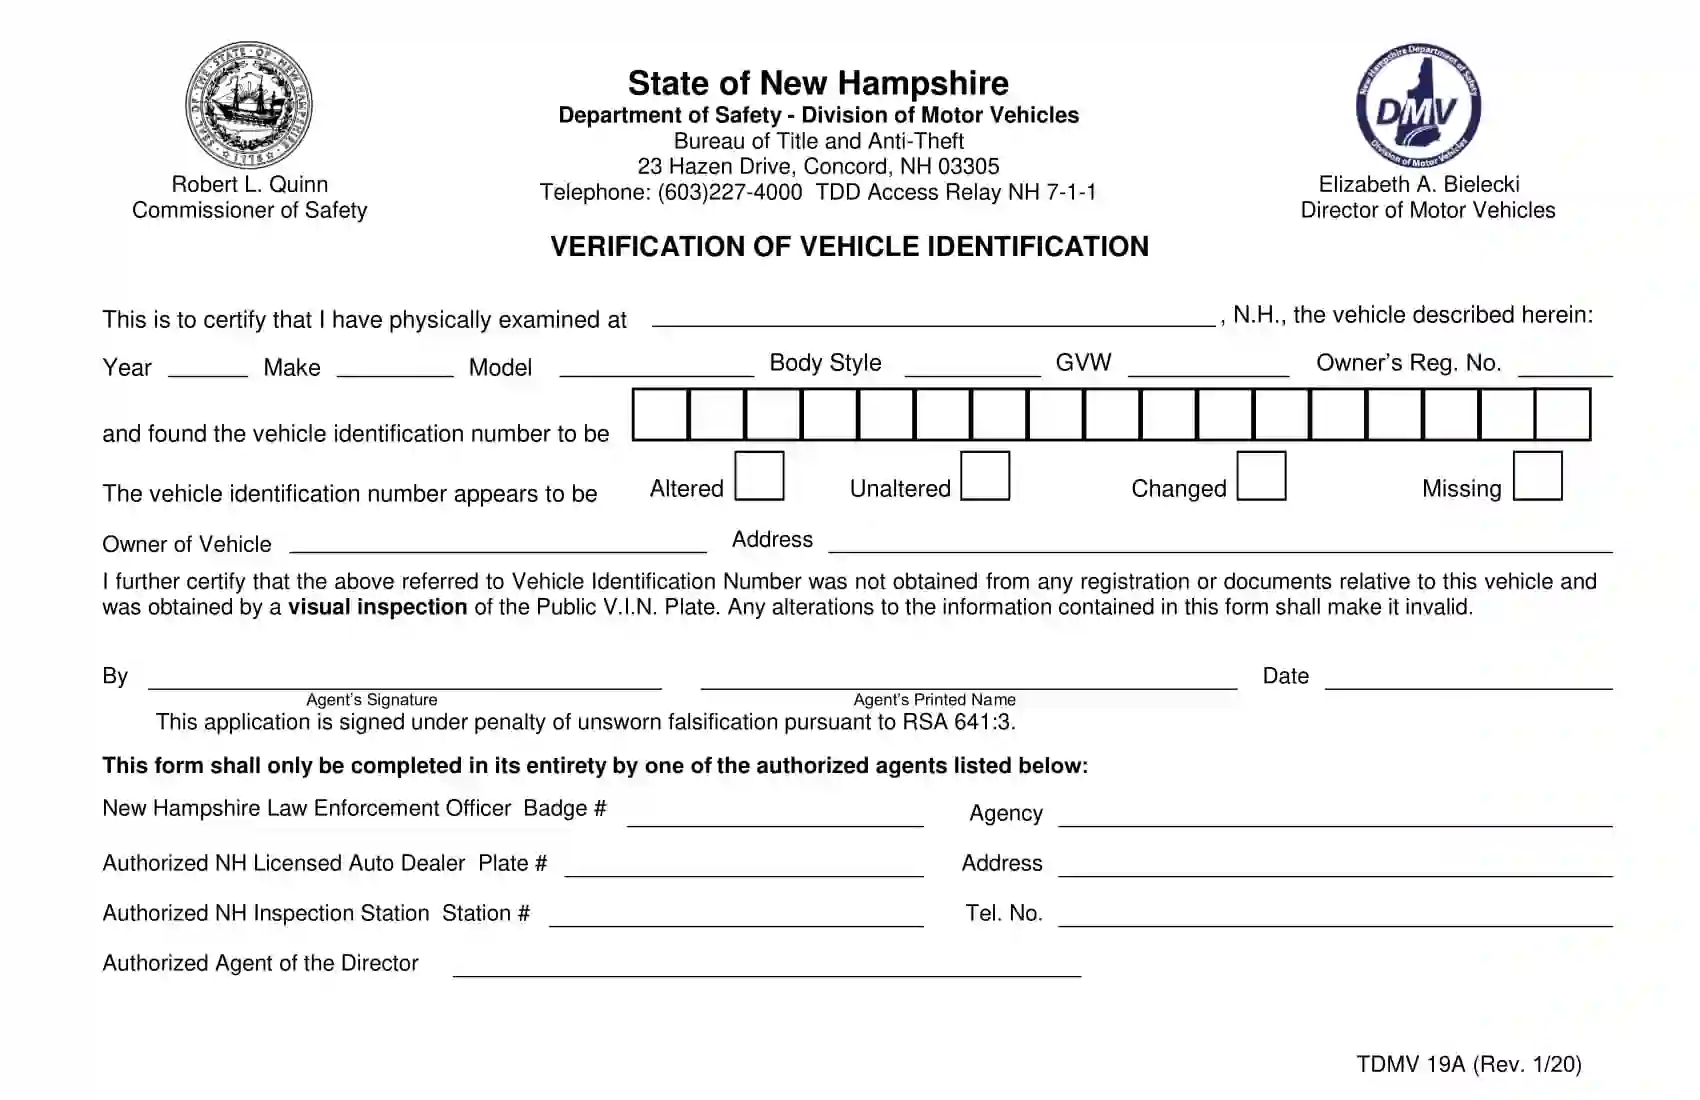 (Vehicle) Form TDMV 19A